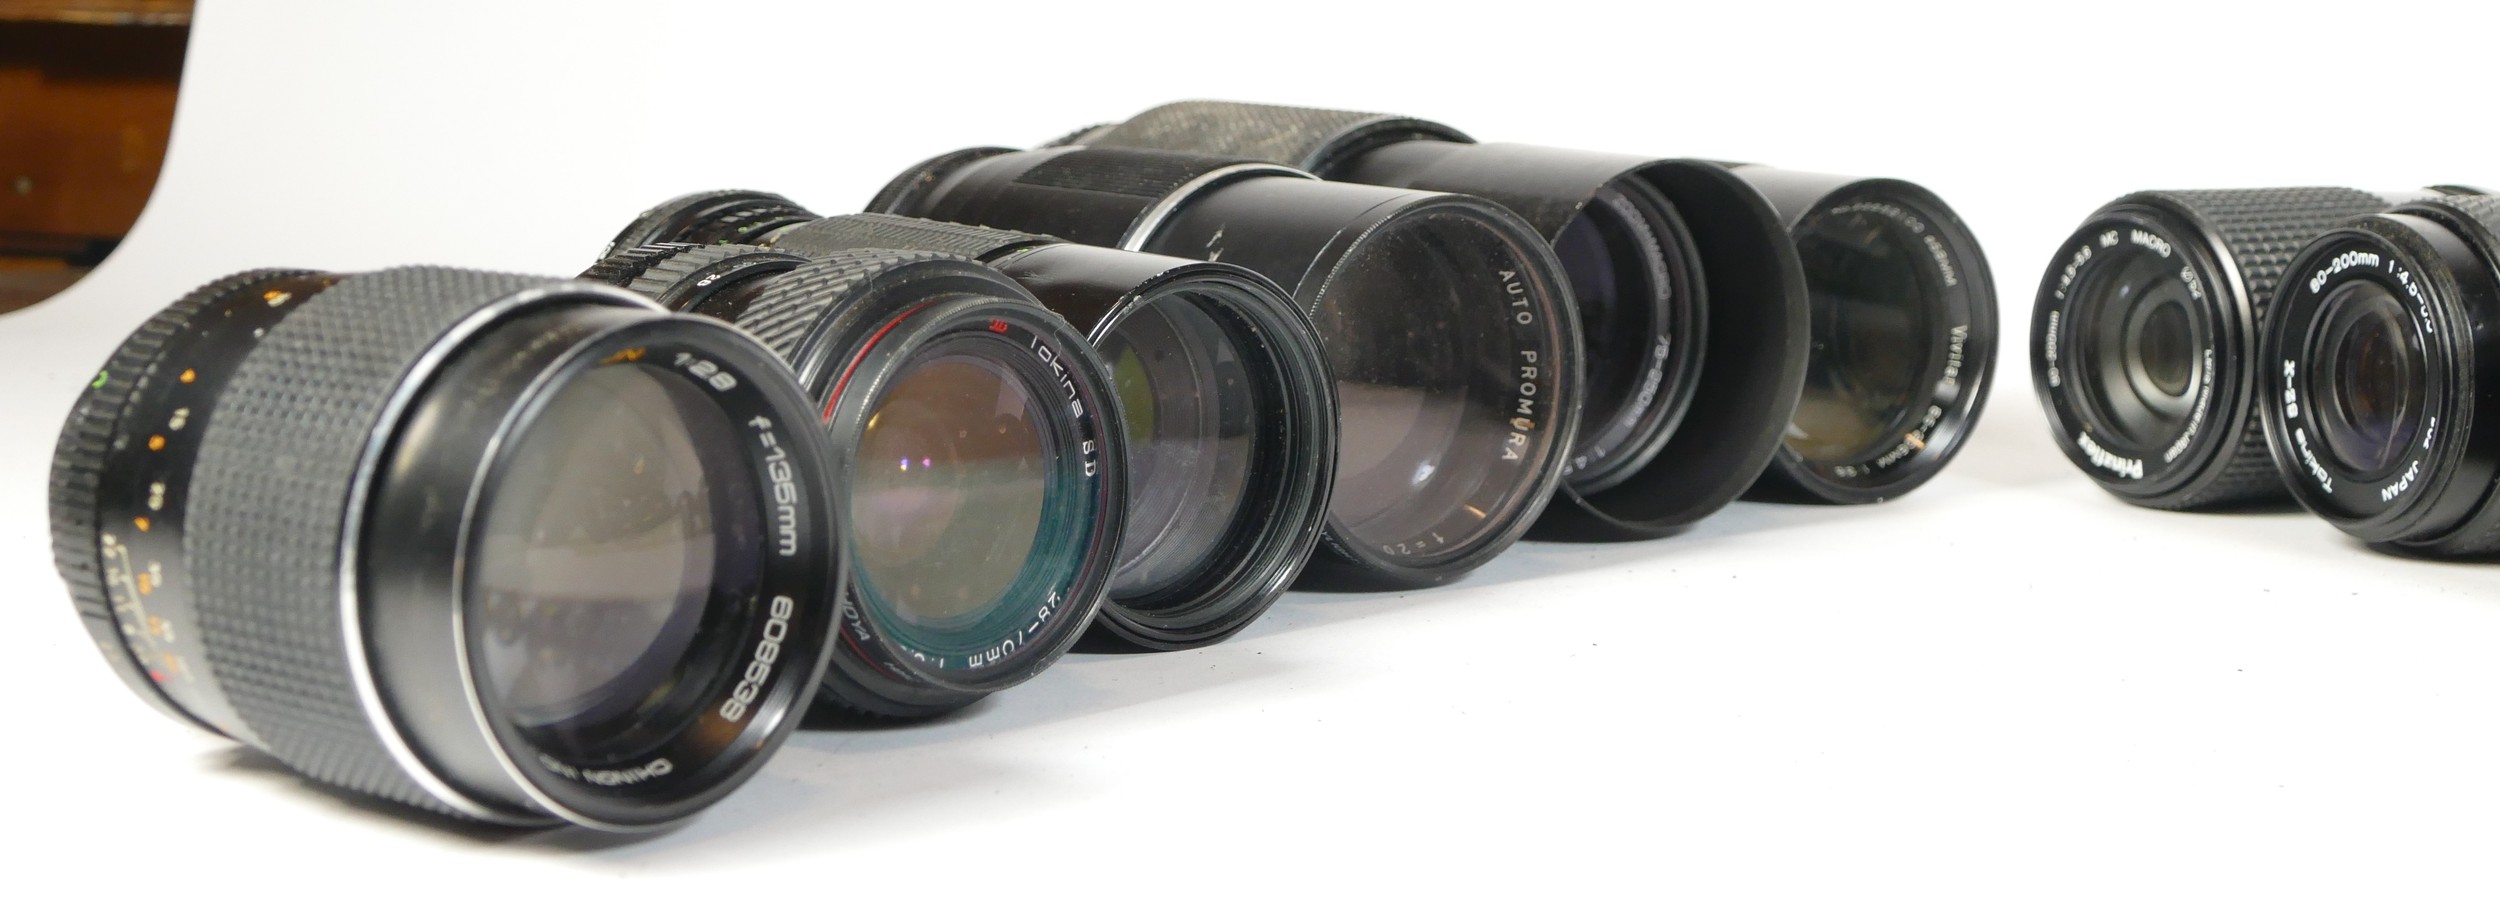 Twelve SLR vintage film cameras to include a Zenit B, a Praktica MTL5B, a Zenit EM and a Yashica - Image 4 of 4